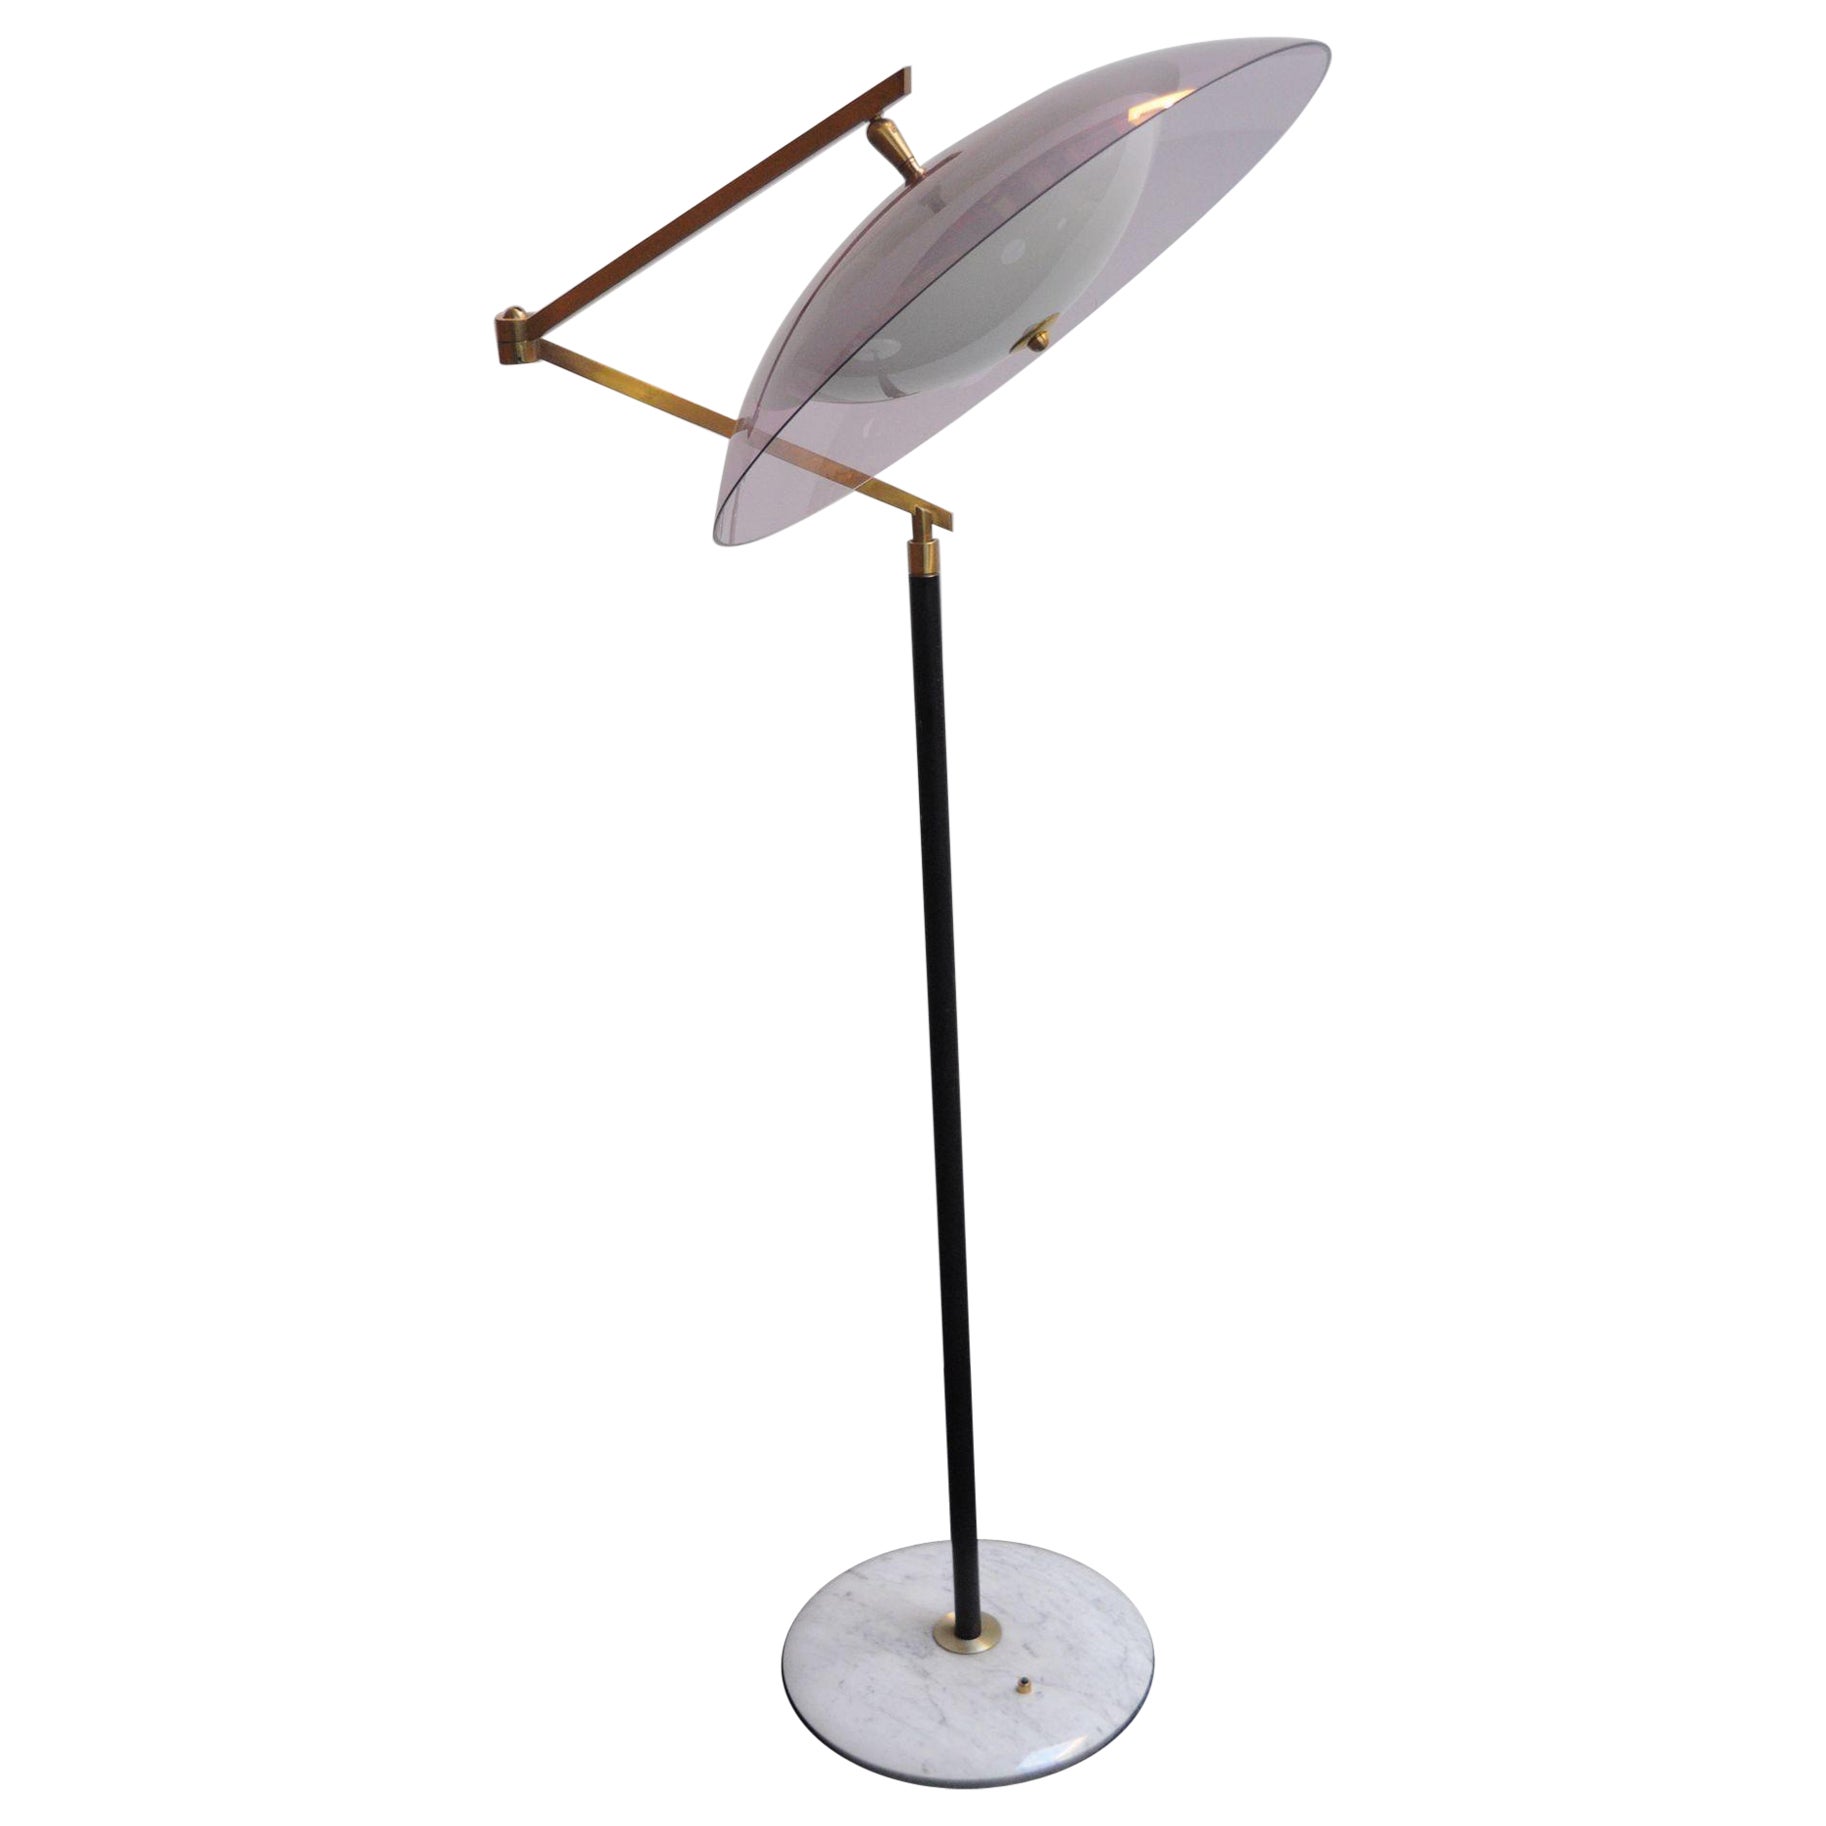 Italian Modernist "Orléans" Brass and Acrylic Adjustable Floor Lamp by Stilux